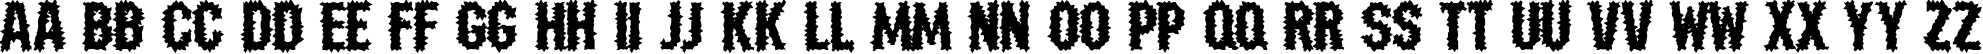 Пример написания английского алфавита шрифтом a_MachinaNovaBrk